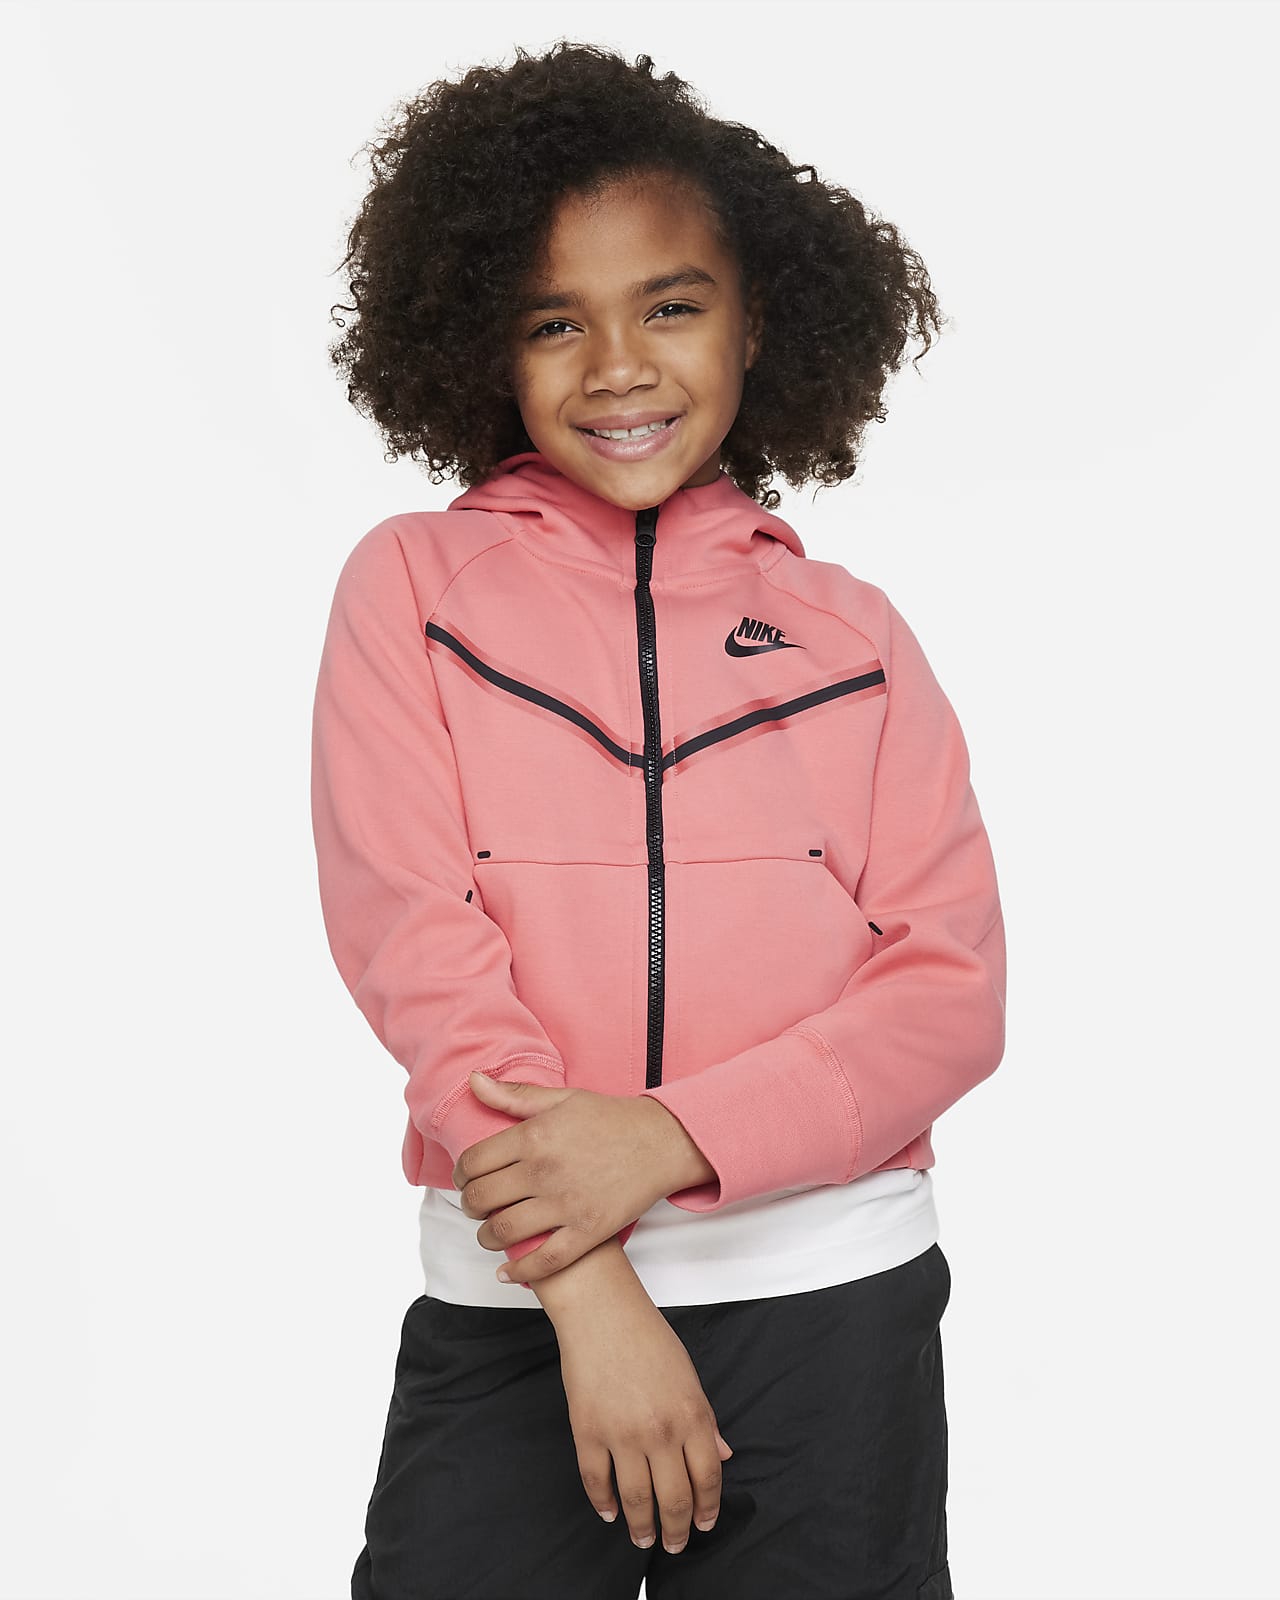 IJver skelet rijk Nike Sportswear Tech Fleece Hoodie met rits voor meisjes. Nike NL